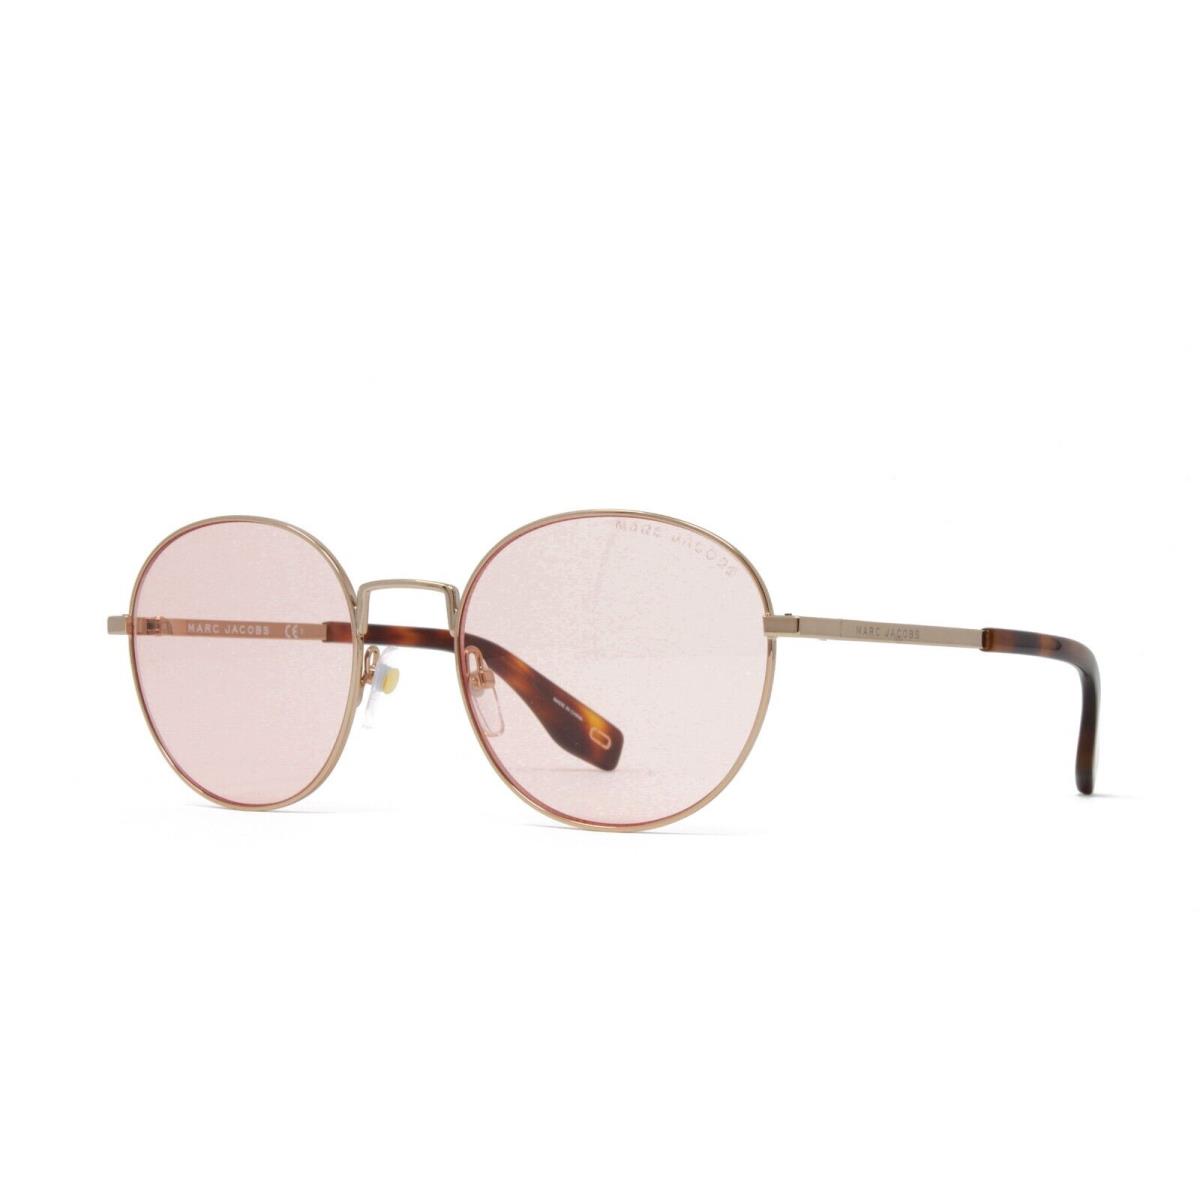 Marc Jacobs Round Men`s Sunglasses MJ272S Color 1N5 Coral Size 53mm - Frame: Gold, Lens: Coral